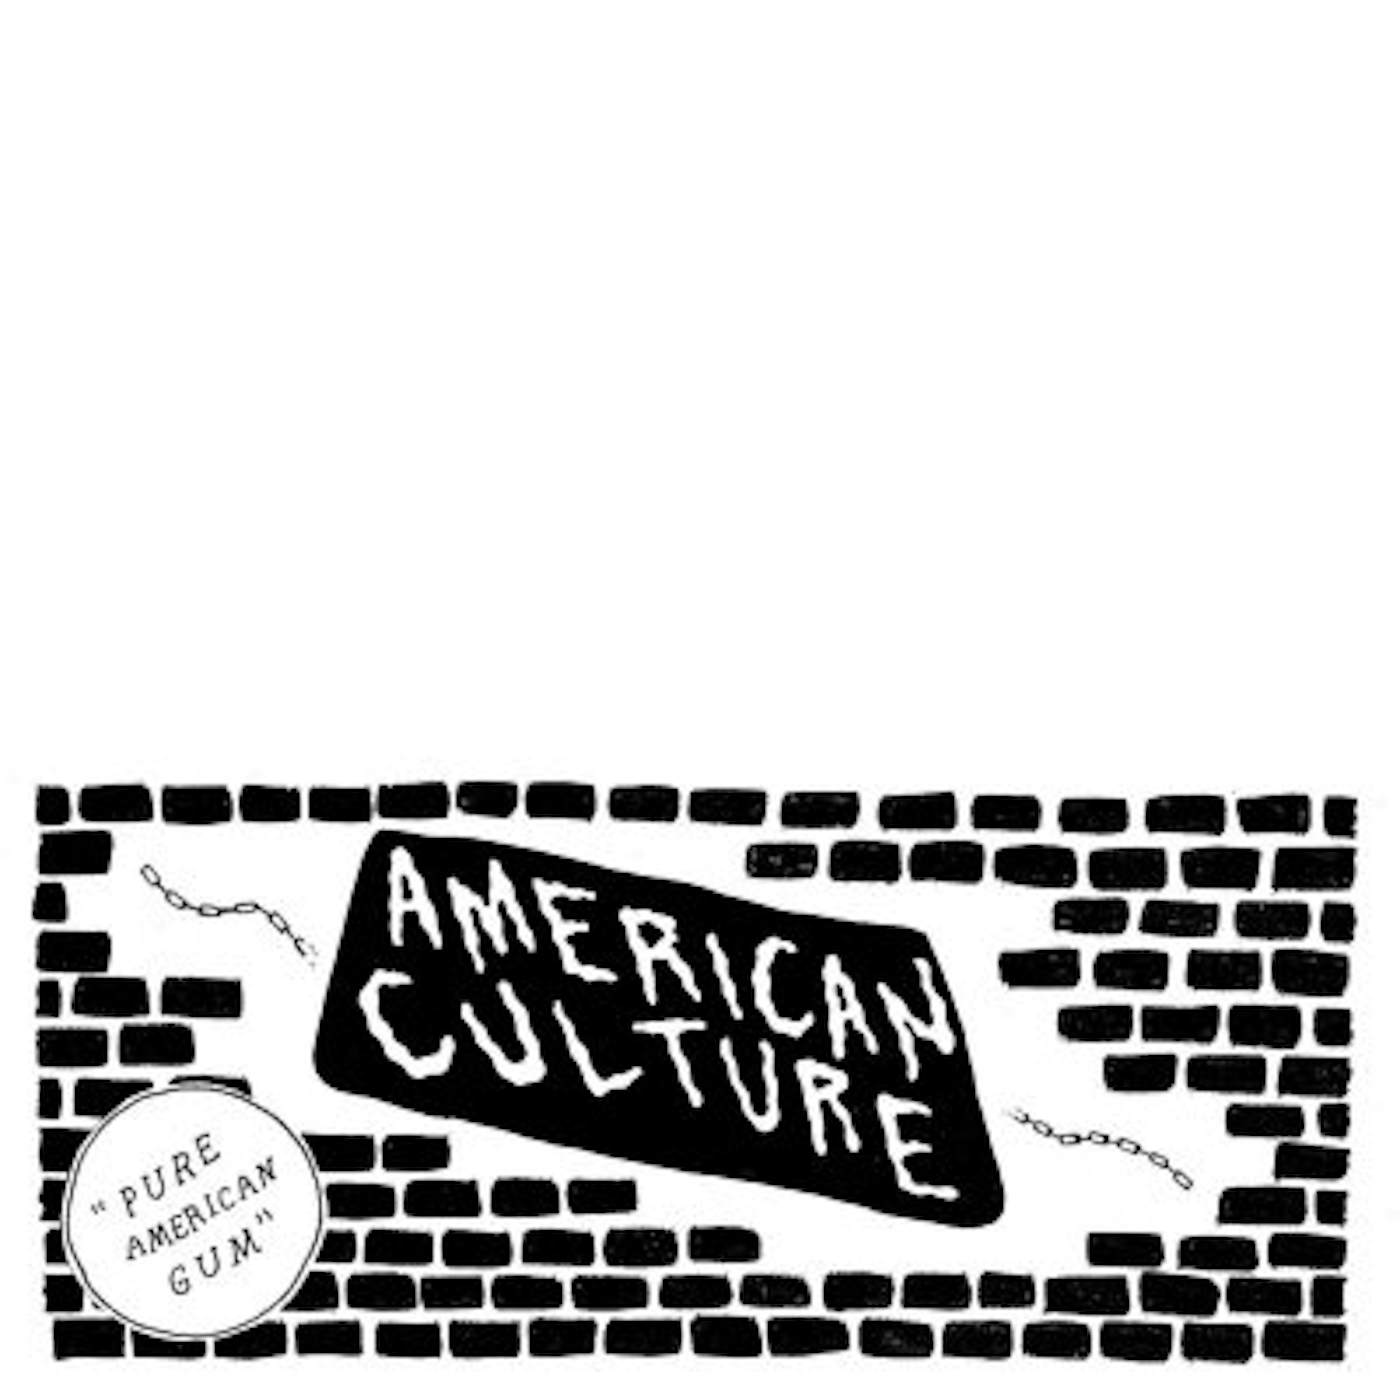 American Culture Pure American Gum Vinyl Record